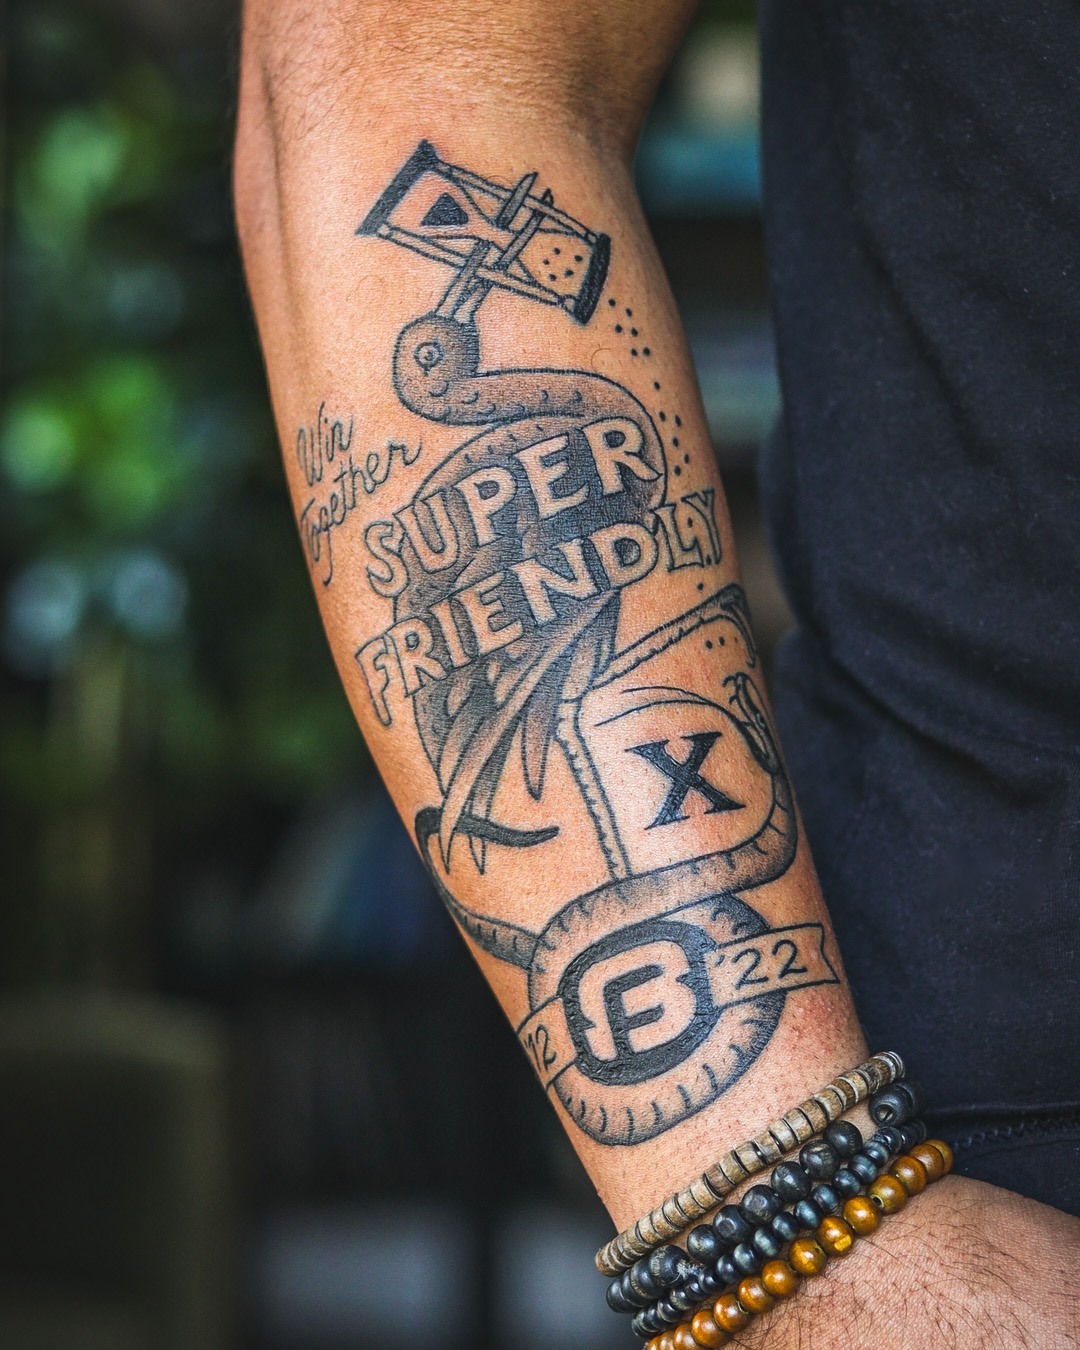 Dan Mall’s tattoo that says “SuperFriendly: Win Together. 12–22.”